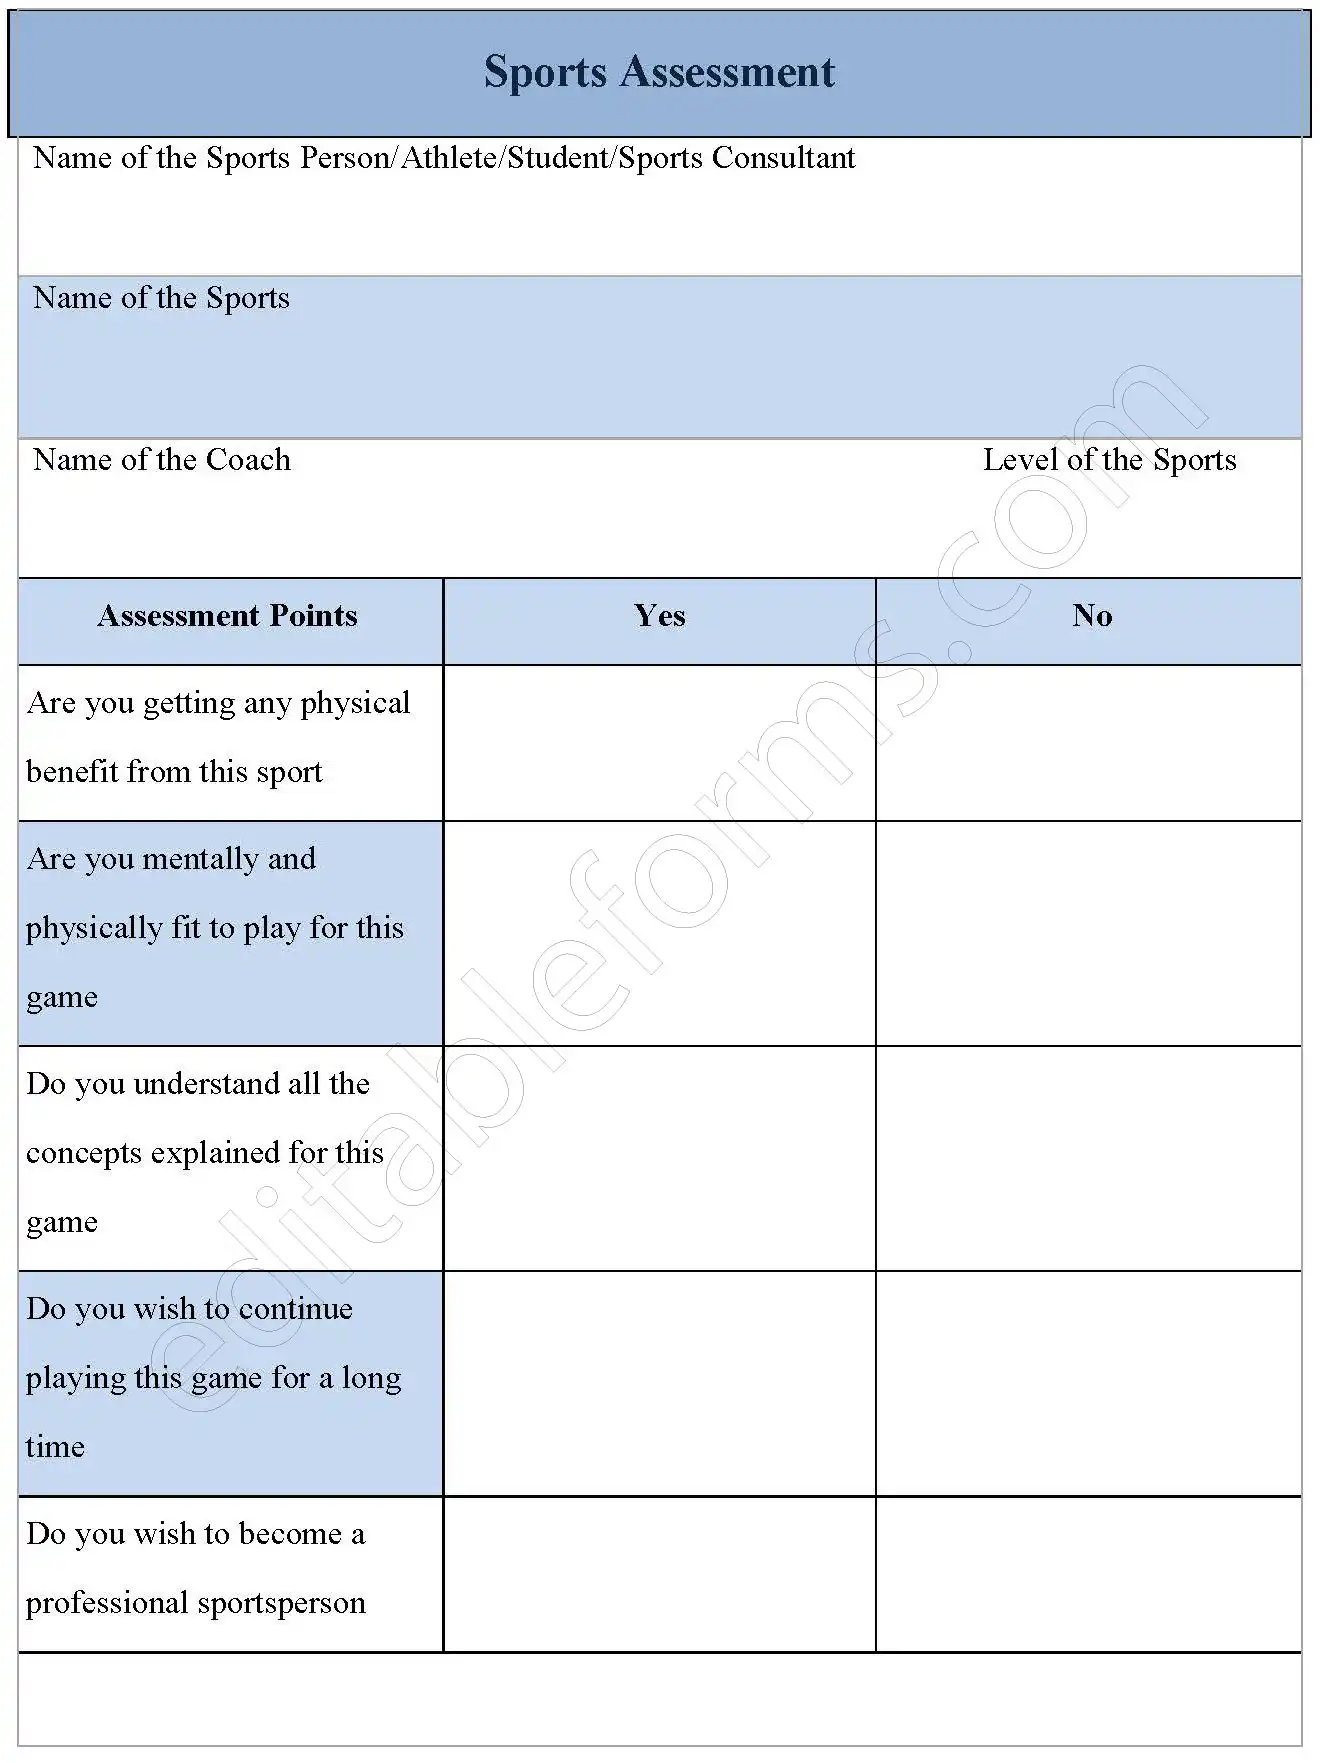 Sports Assessment Fillable PDF Form